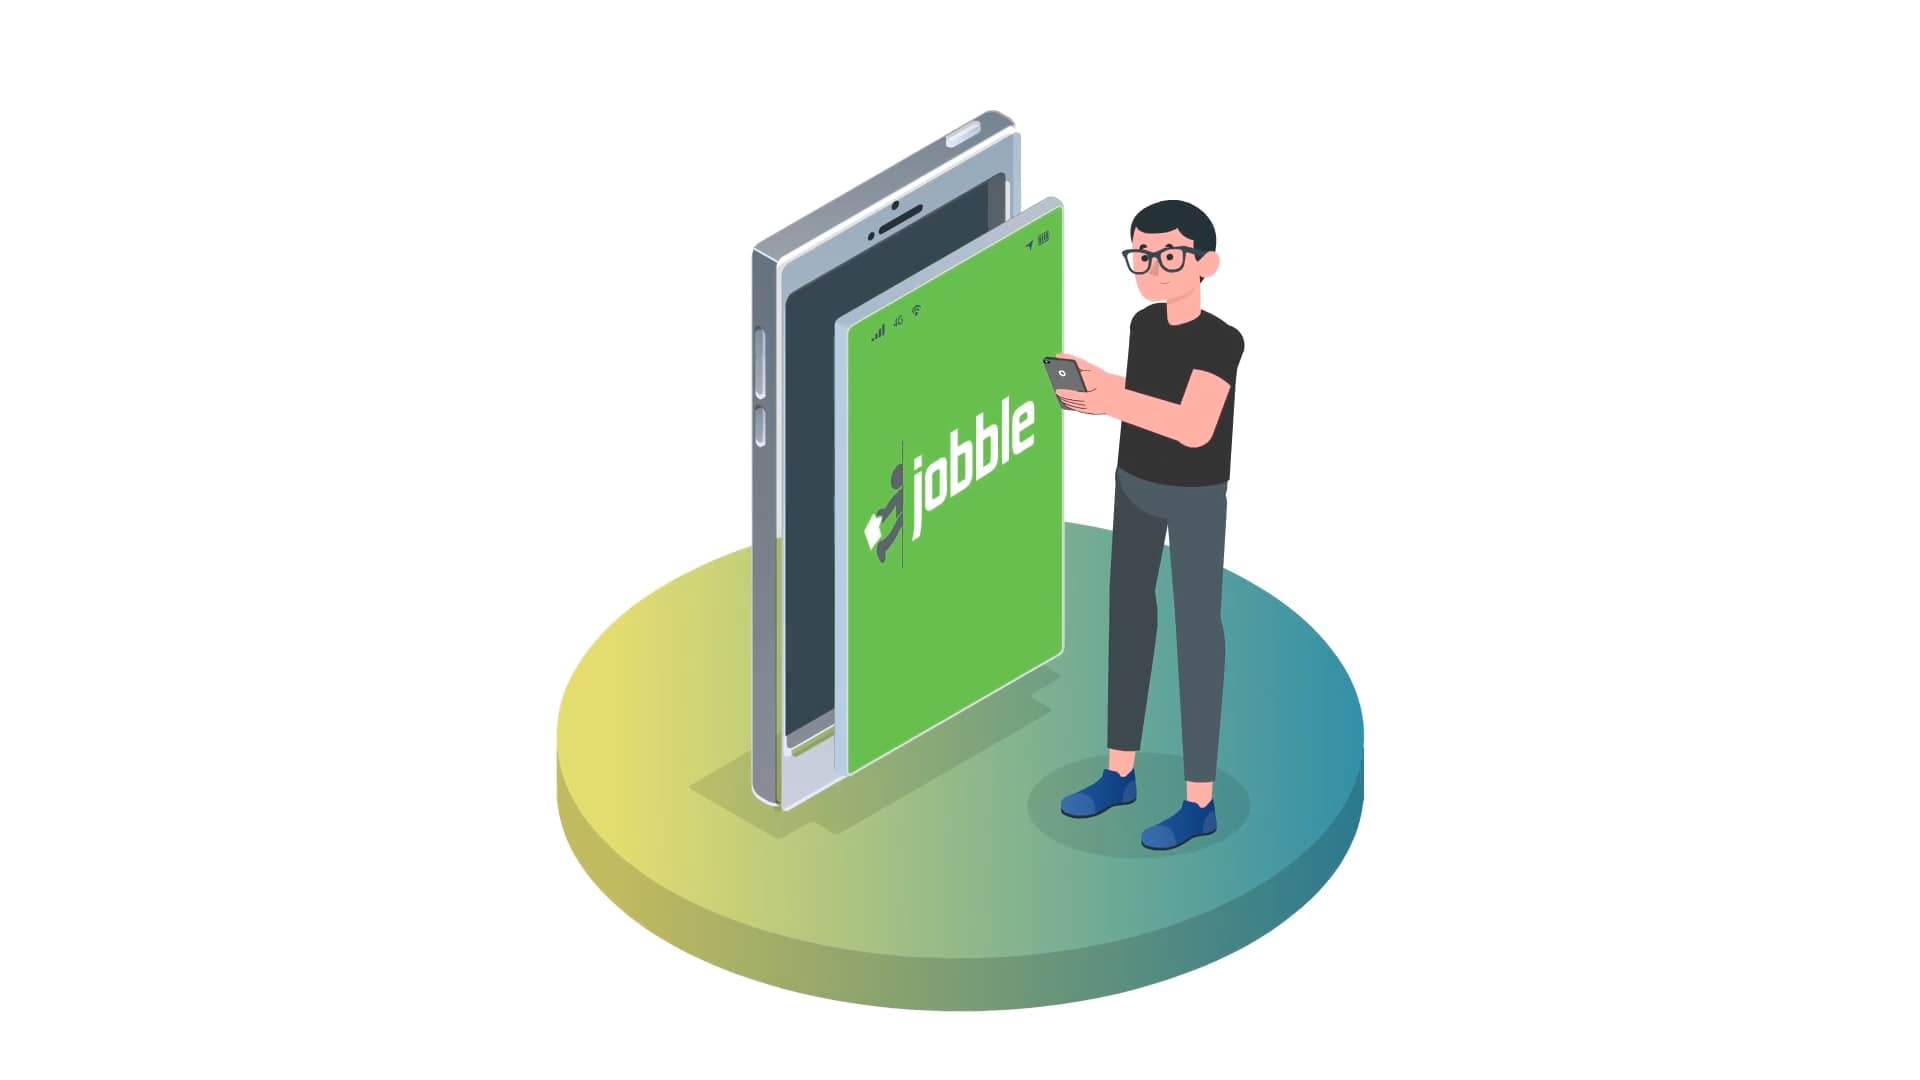 Is jobble a good app?